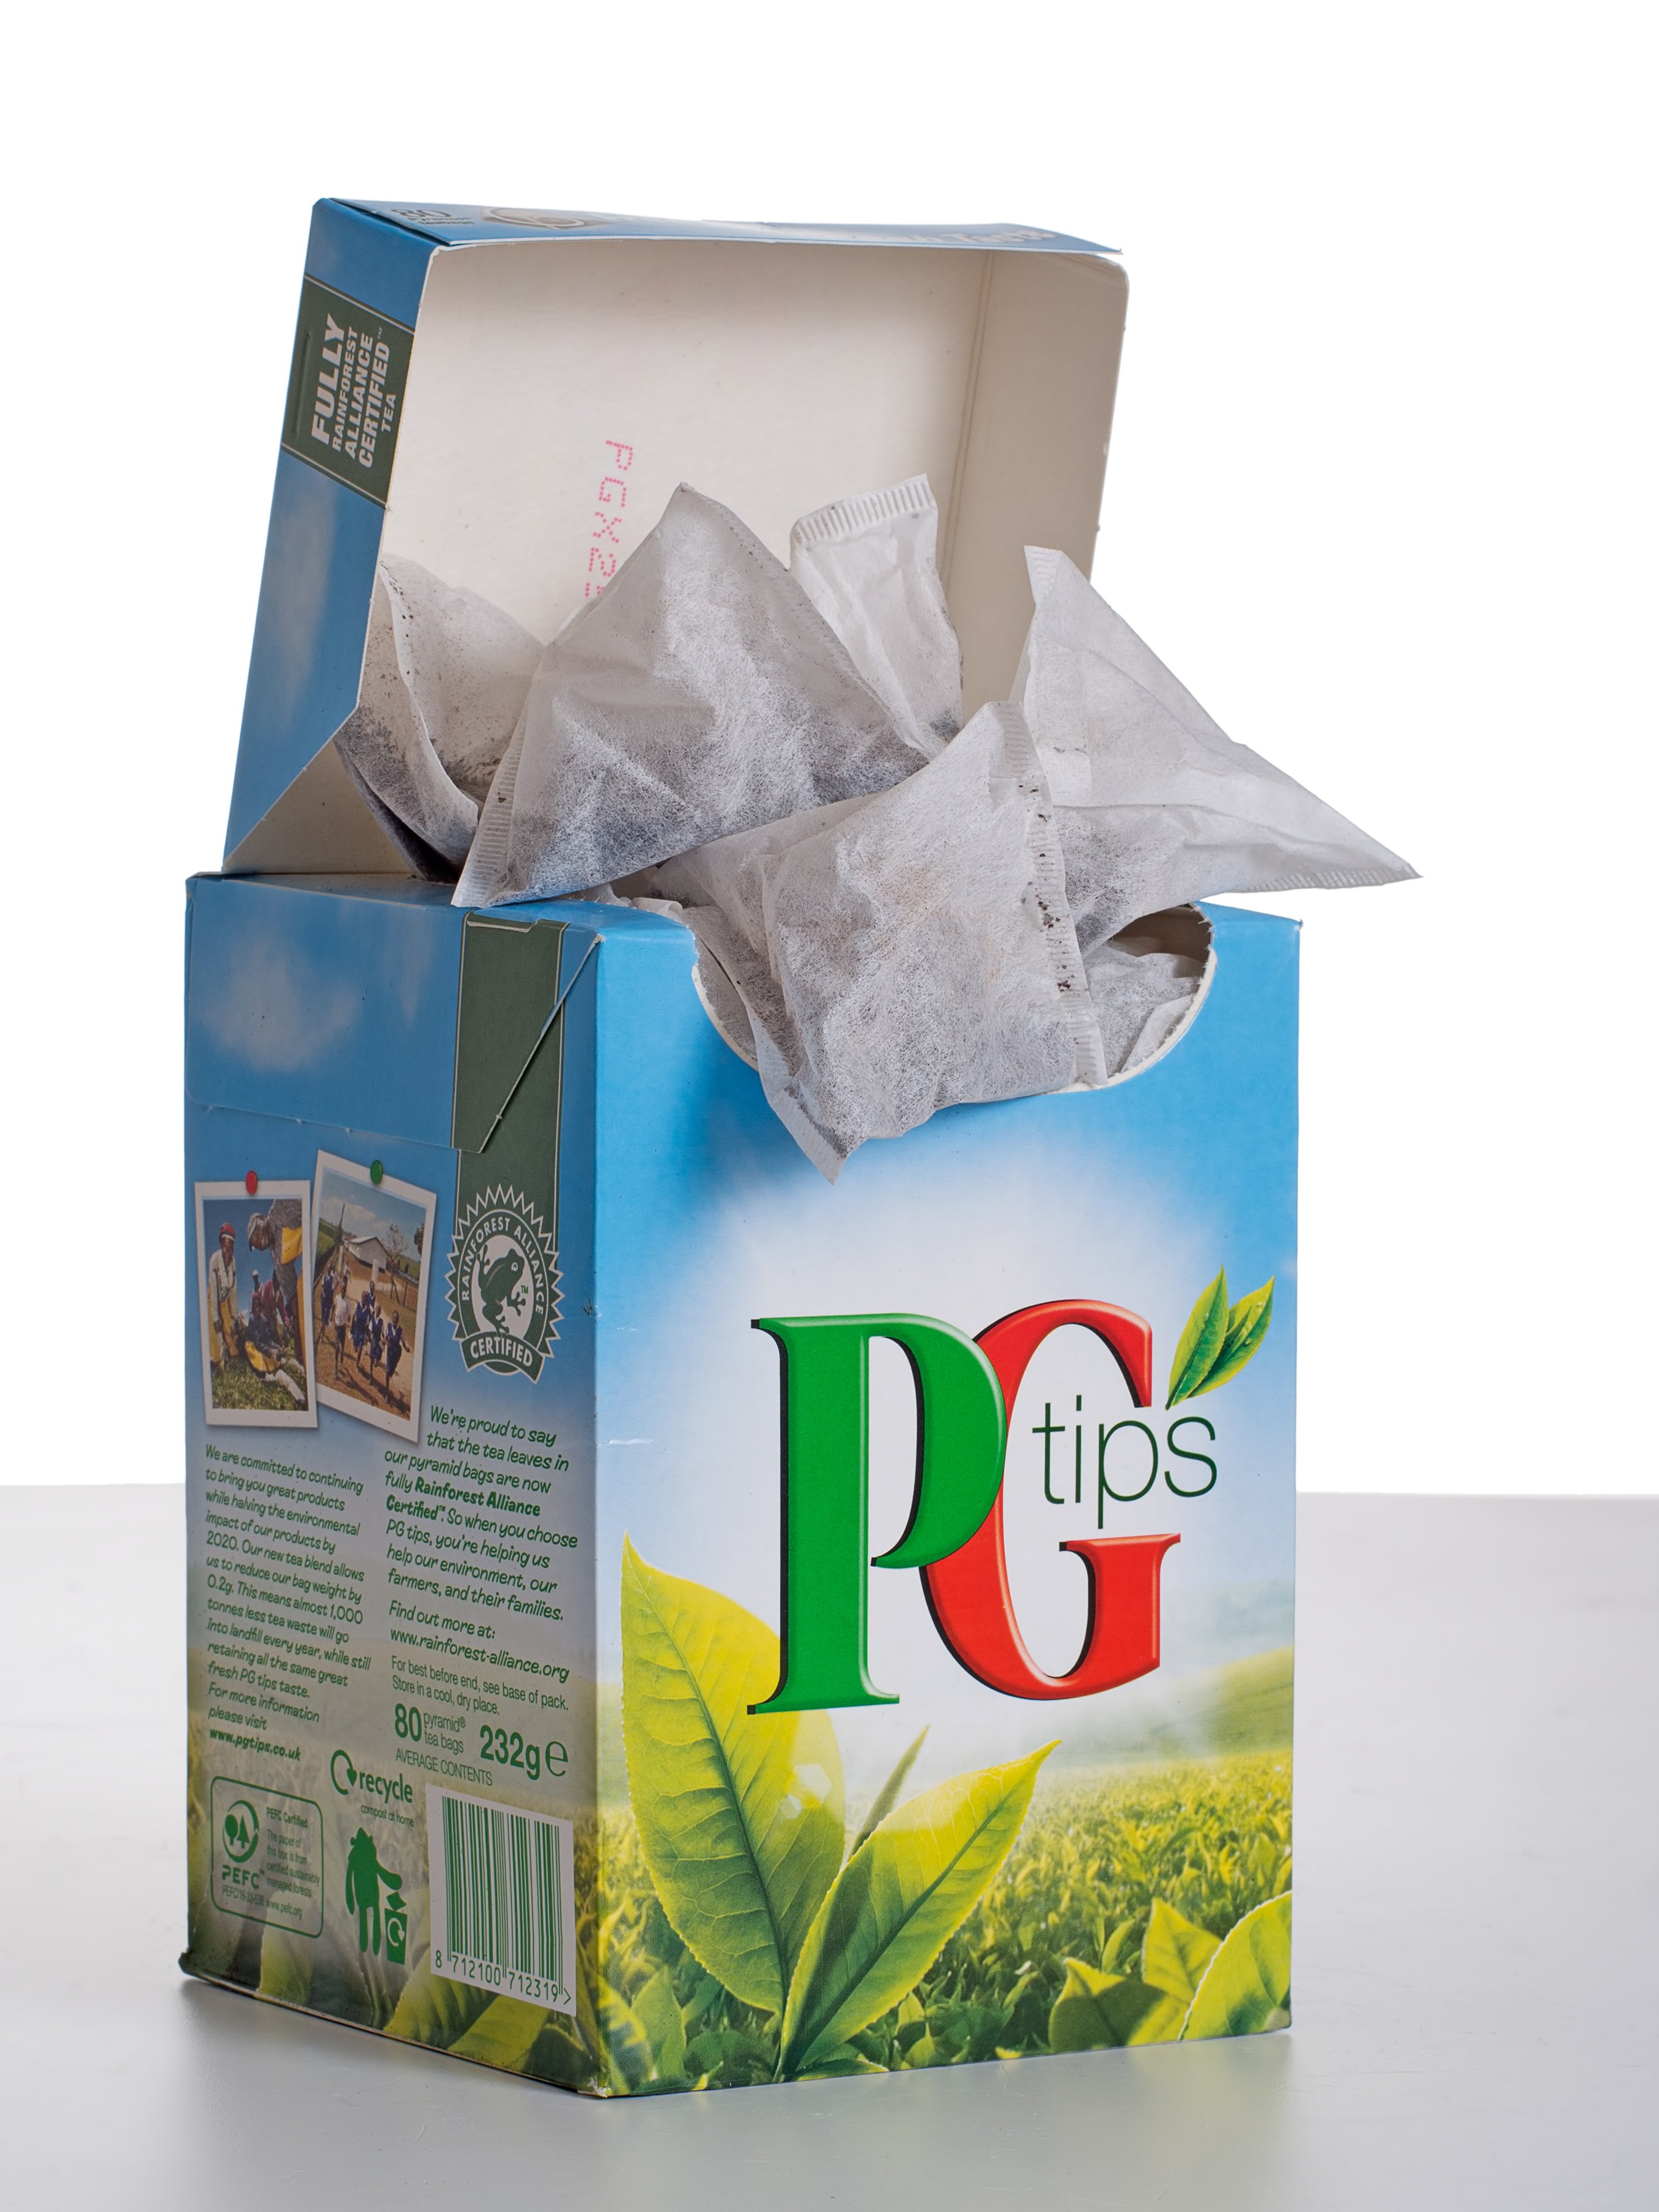 Caja de té PG Tips / Imagen tomada de: Shutterstock